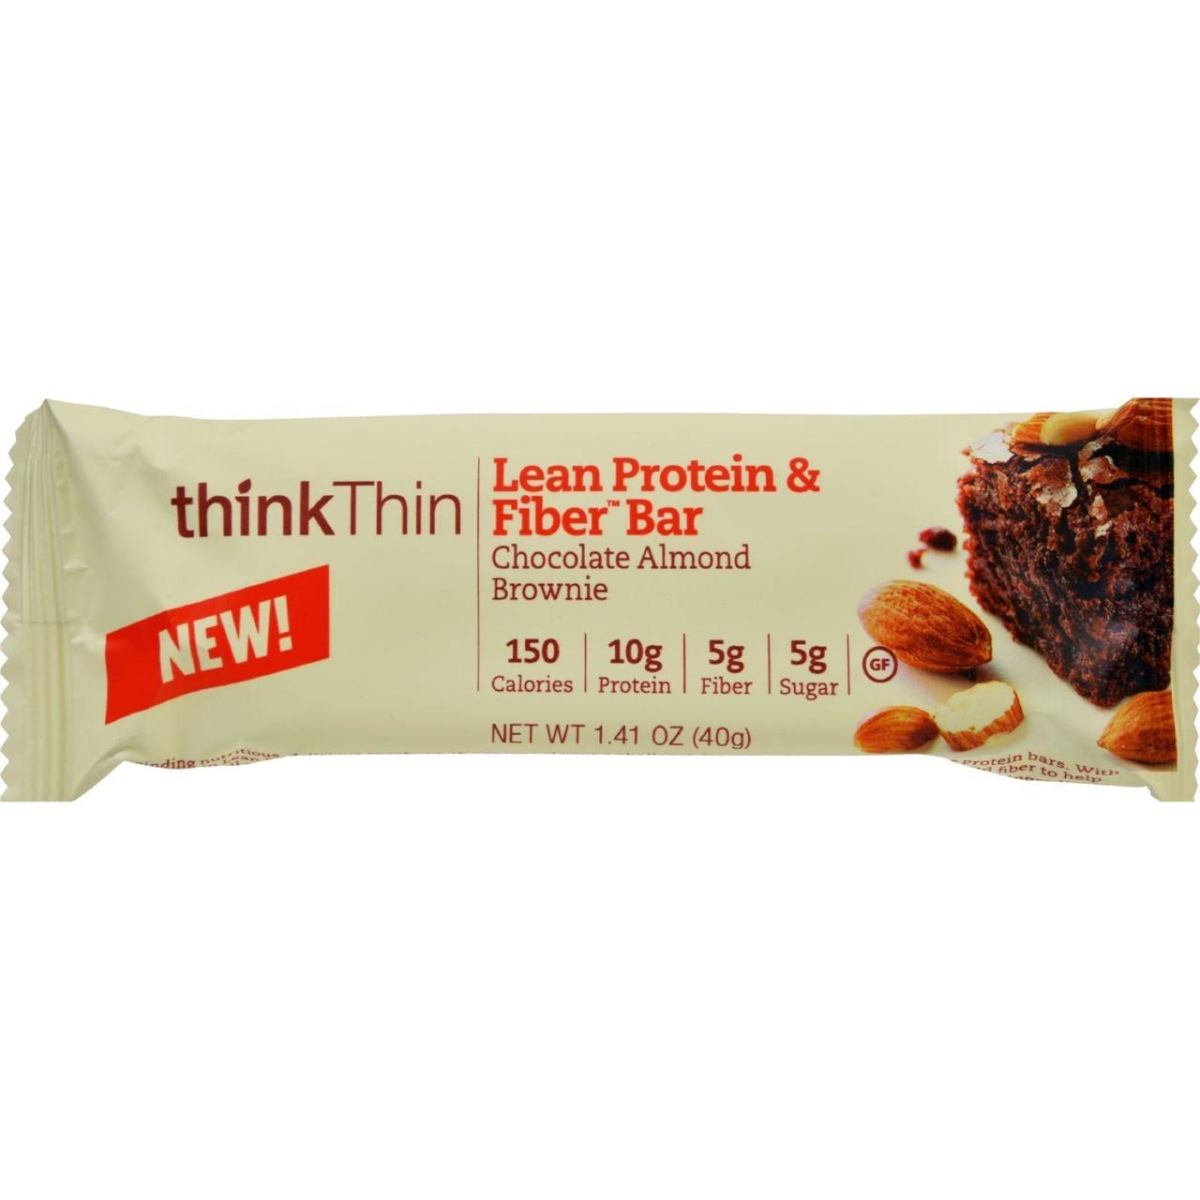 Hg1536846 1.41 Oz Thinkthin Bar Lean Protein Fiber, Chocolate Almond